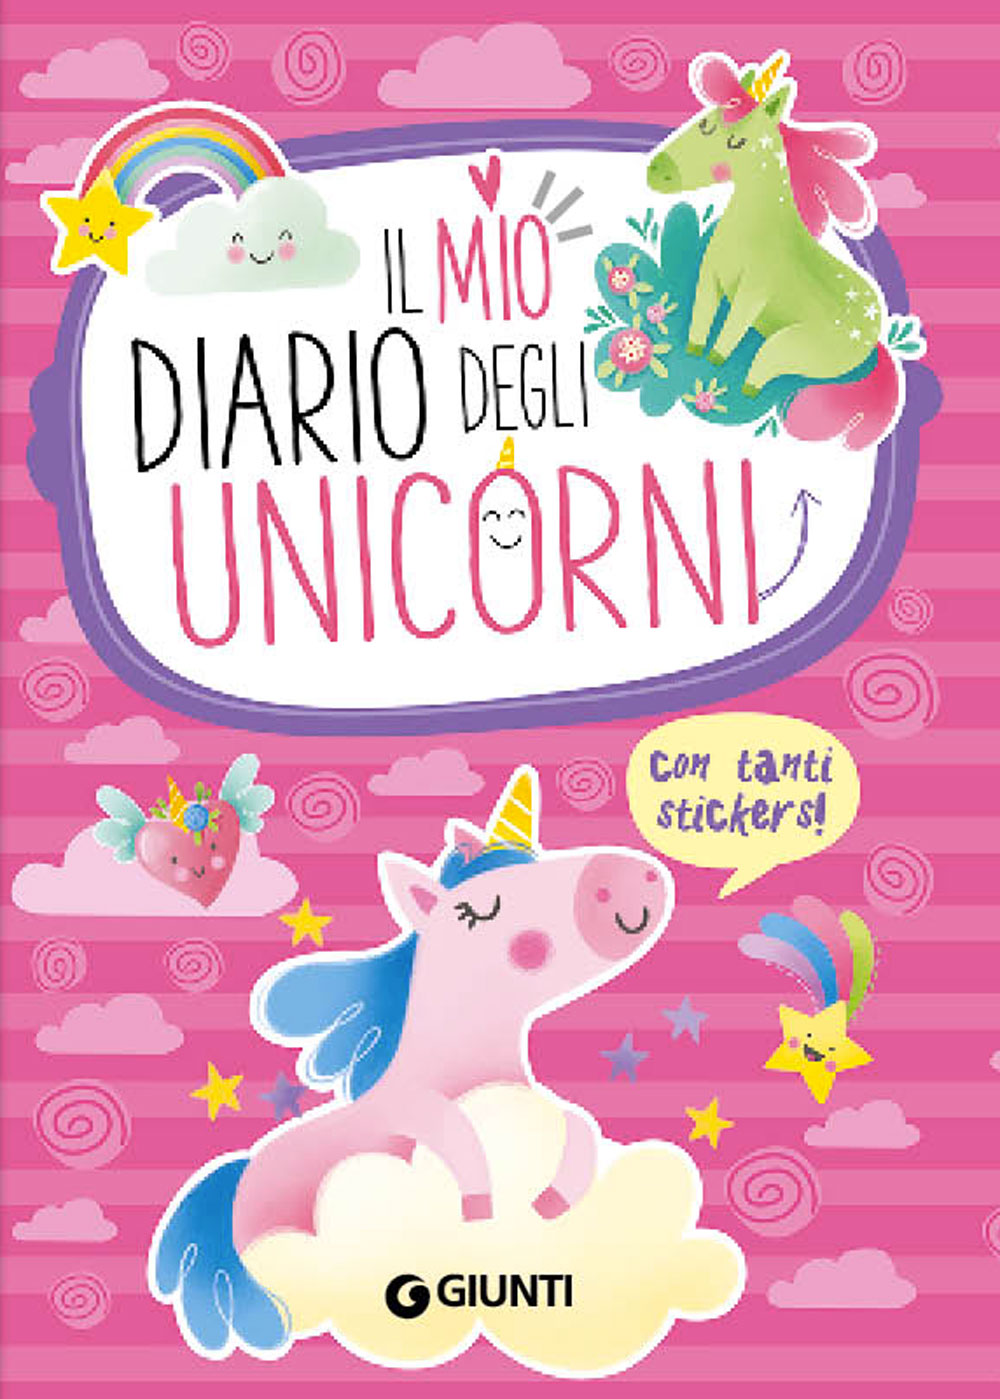 Il mio diario degli unicorni